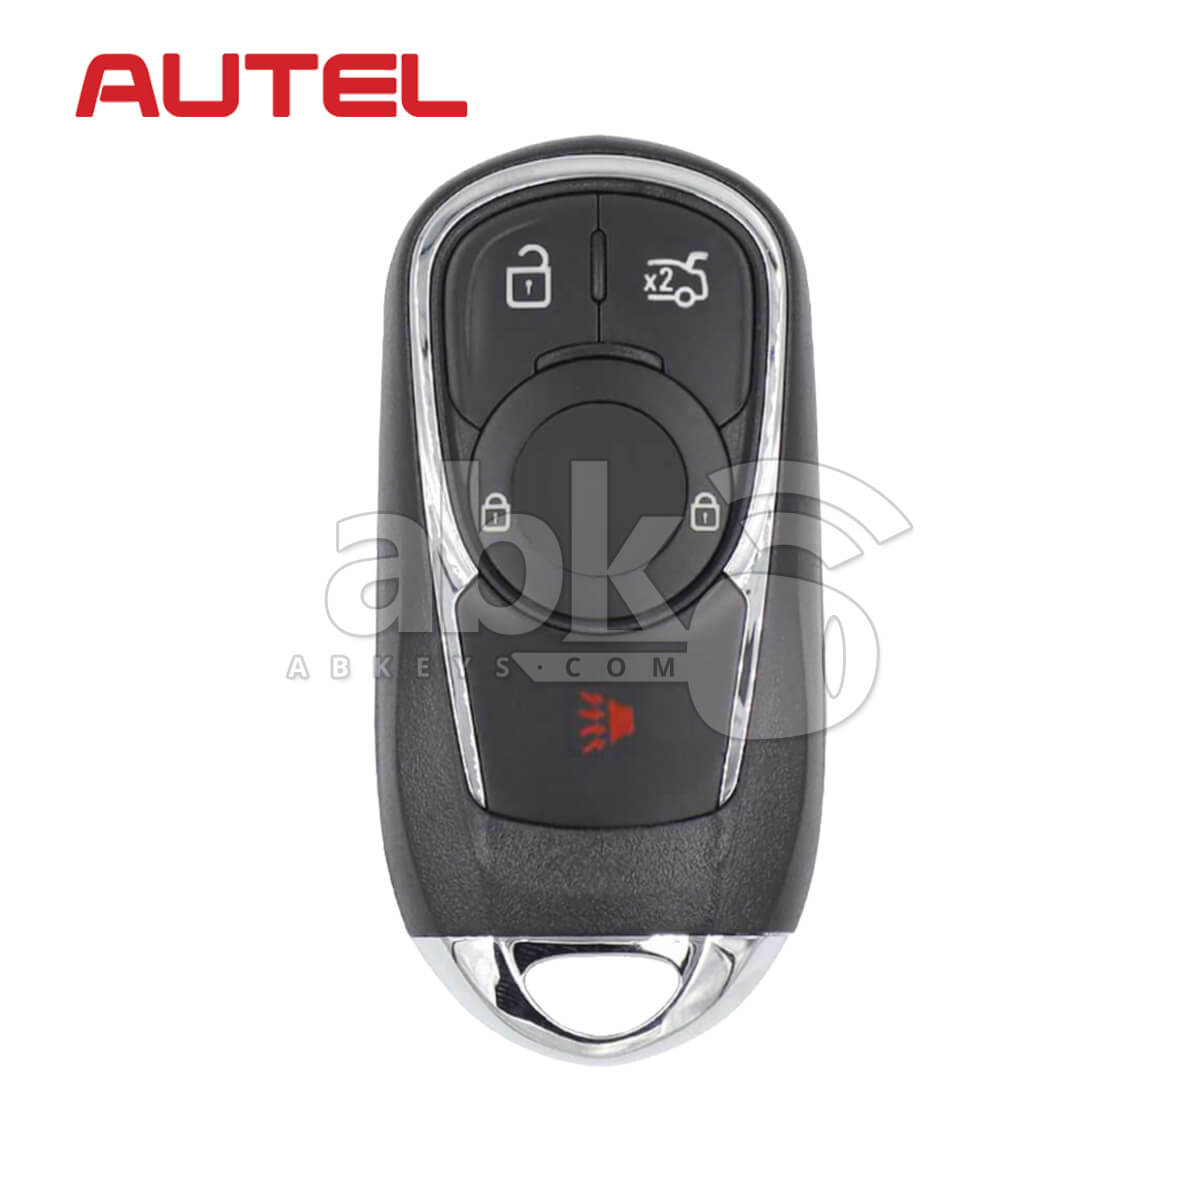 Autel Universal Smart Key 4Buttons Buick Style IKEYOL004AL - ABK-4478-IKEYOL004AL - ABKEYS.COM